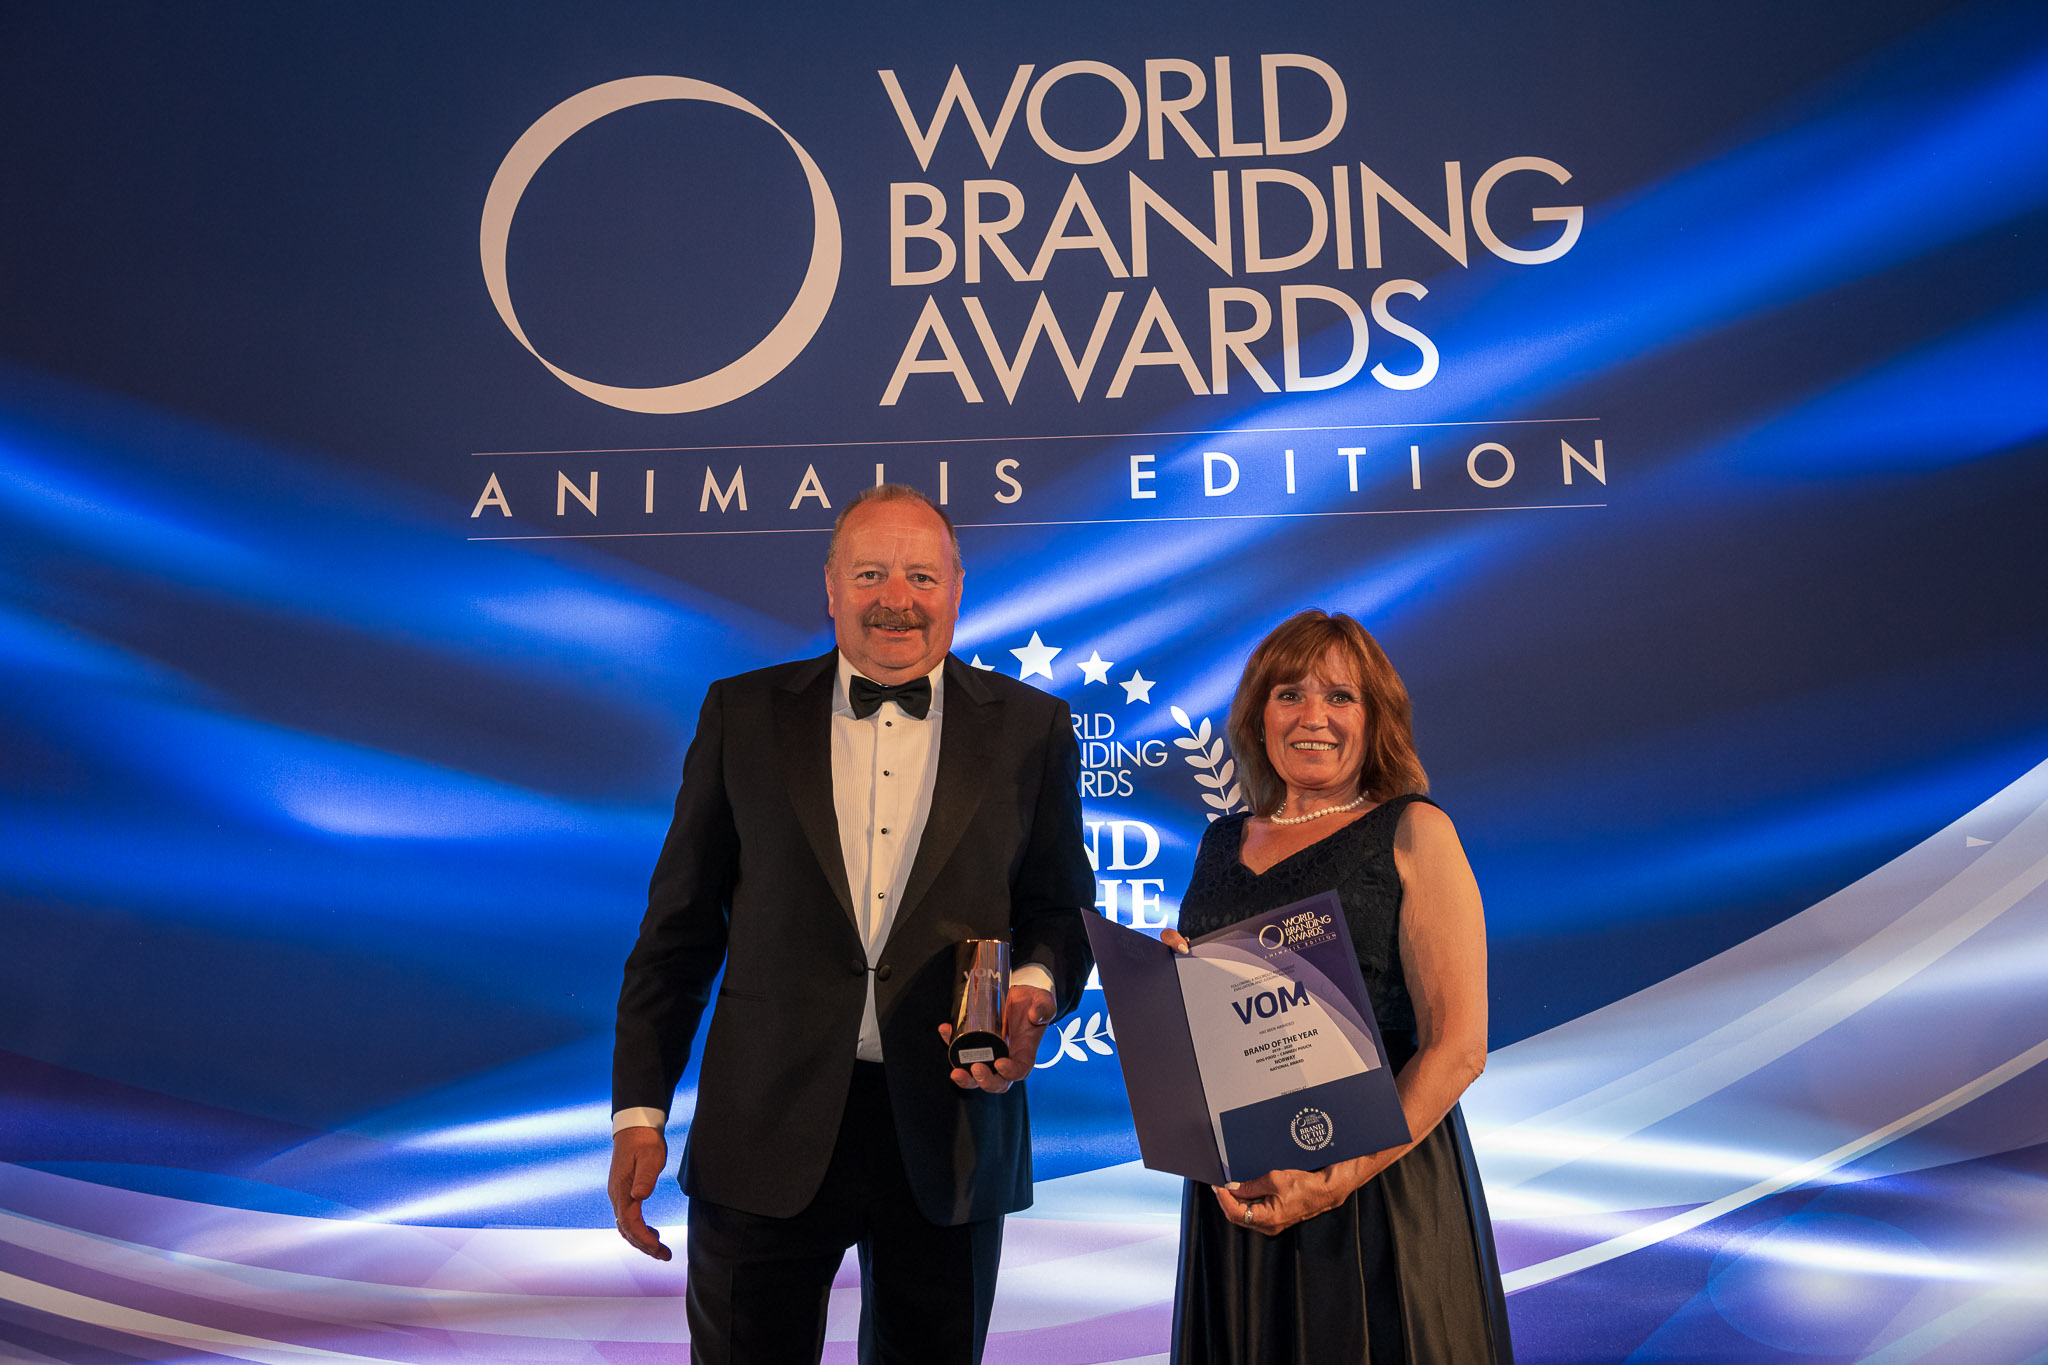 20190703_225940_world_branding_awards_animalis_8196